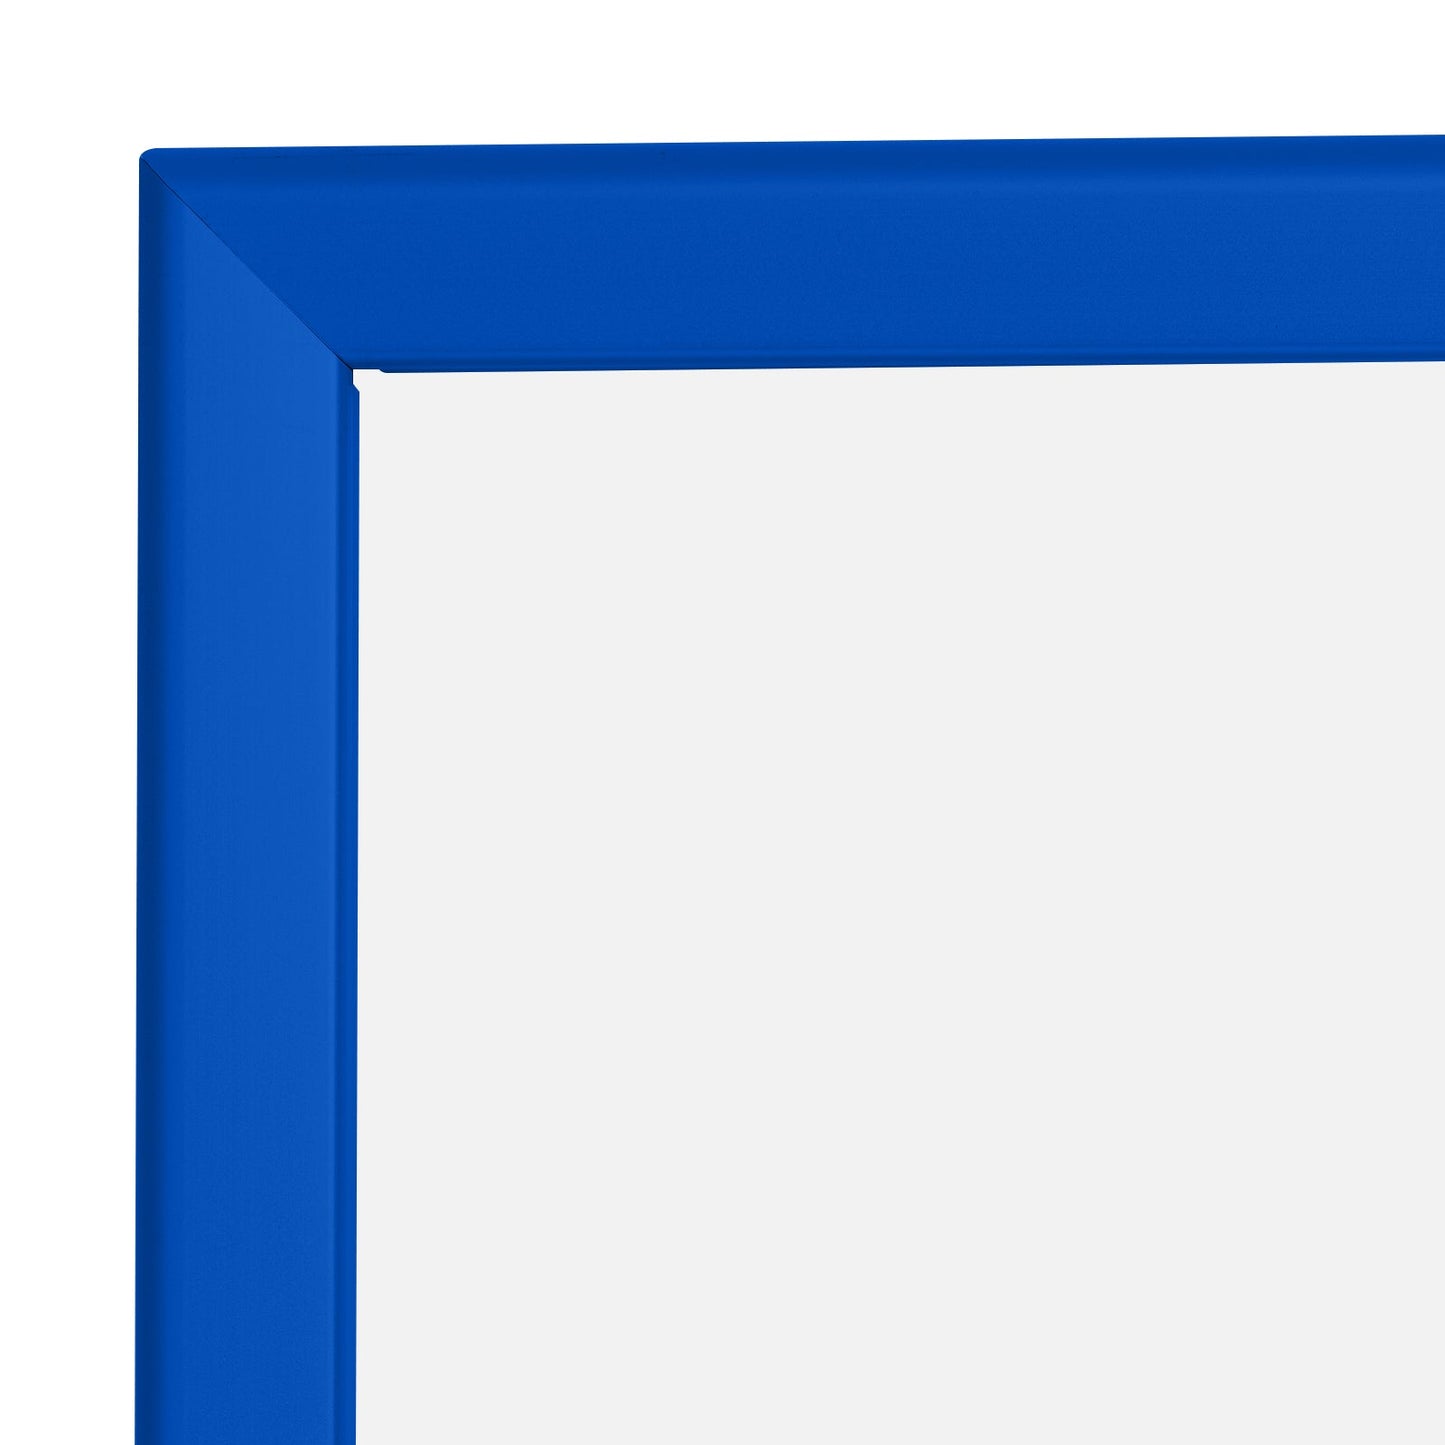 30x40  TRADEframe Blue Snap Frame 30x40 - 1.25 inch profile - Snap Frames Direct